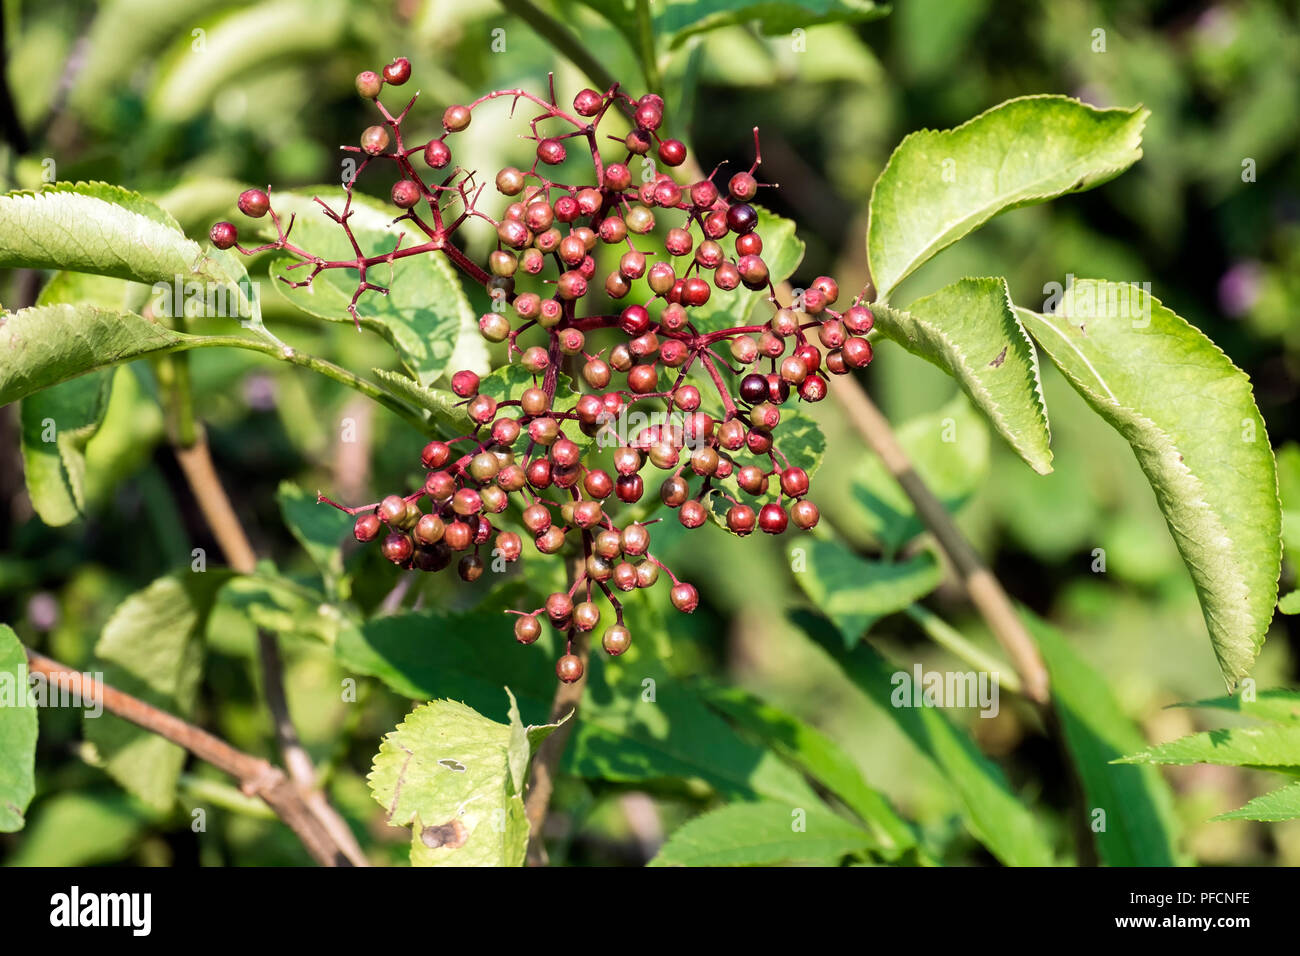 Bunch of maturing dwarf elder berries. Danewort berries (Sambucus ebulus) Stock Photo